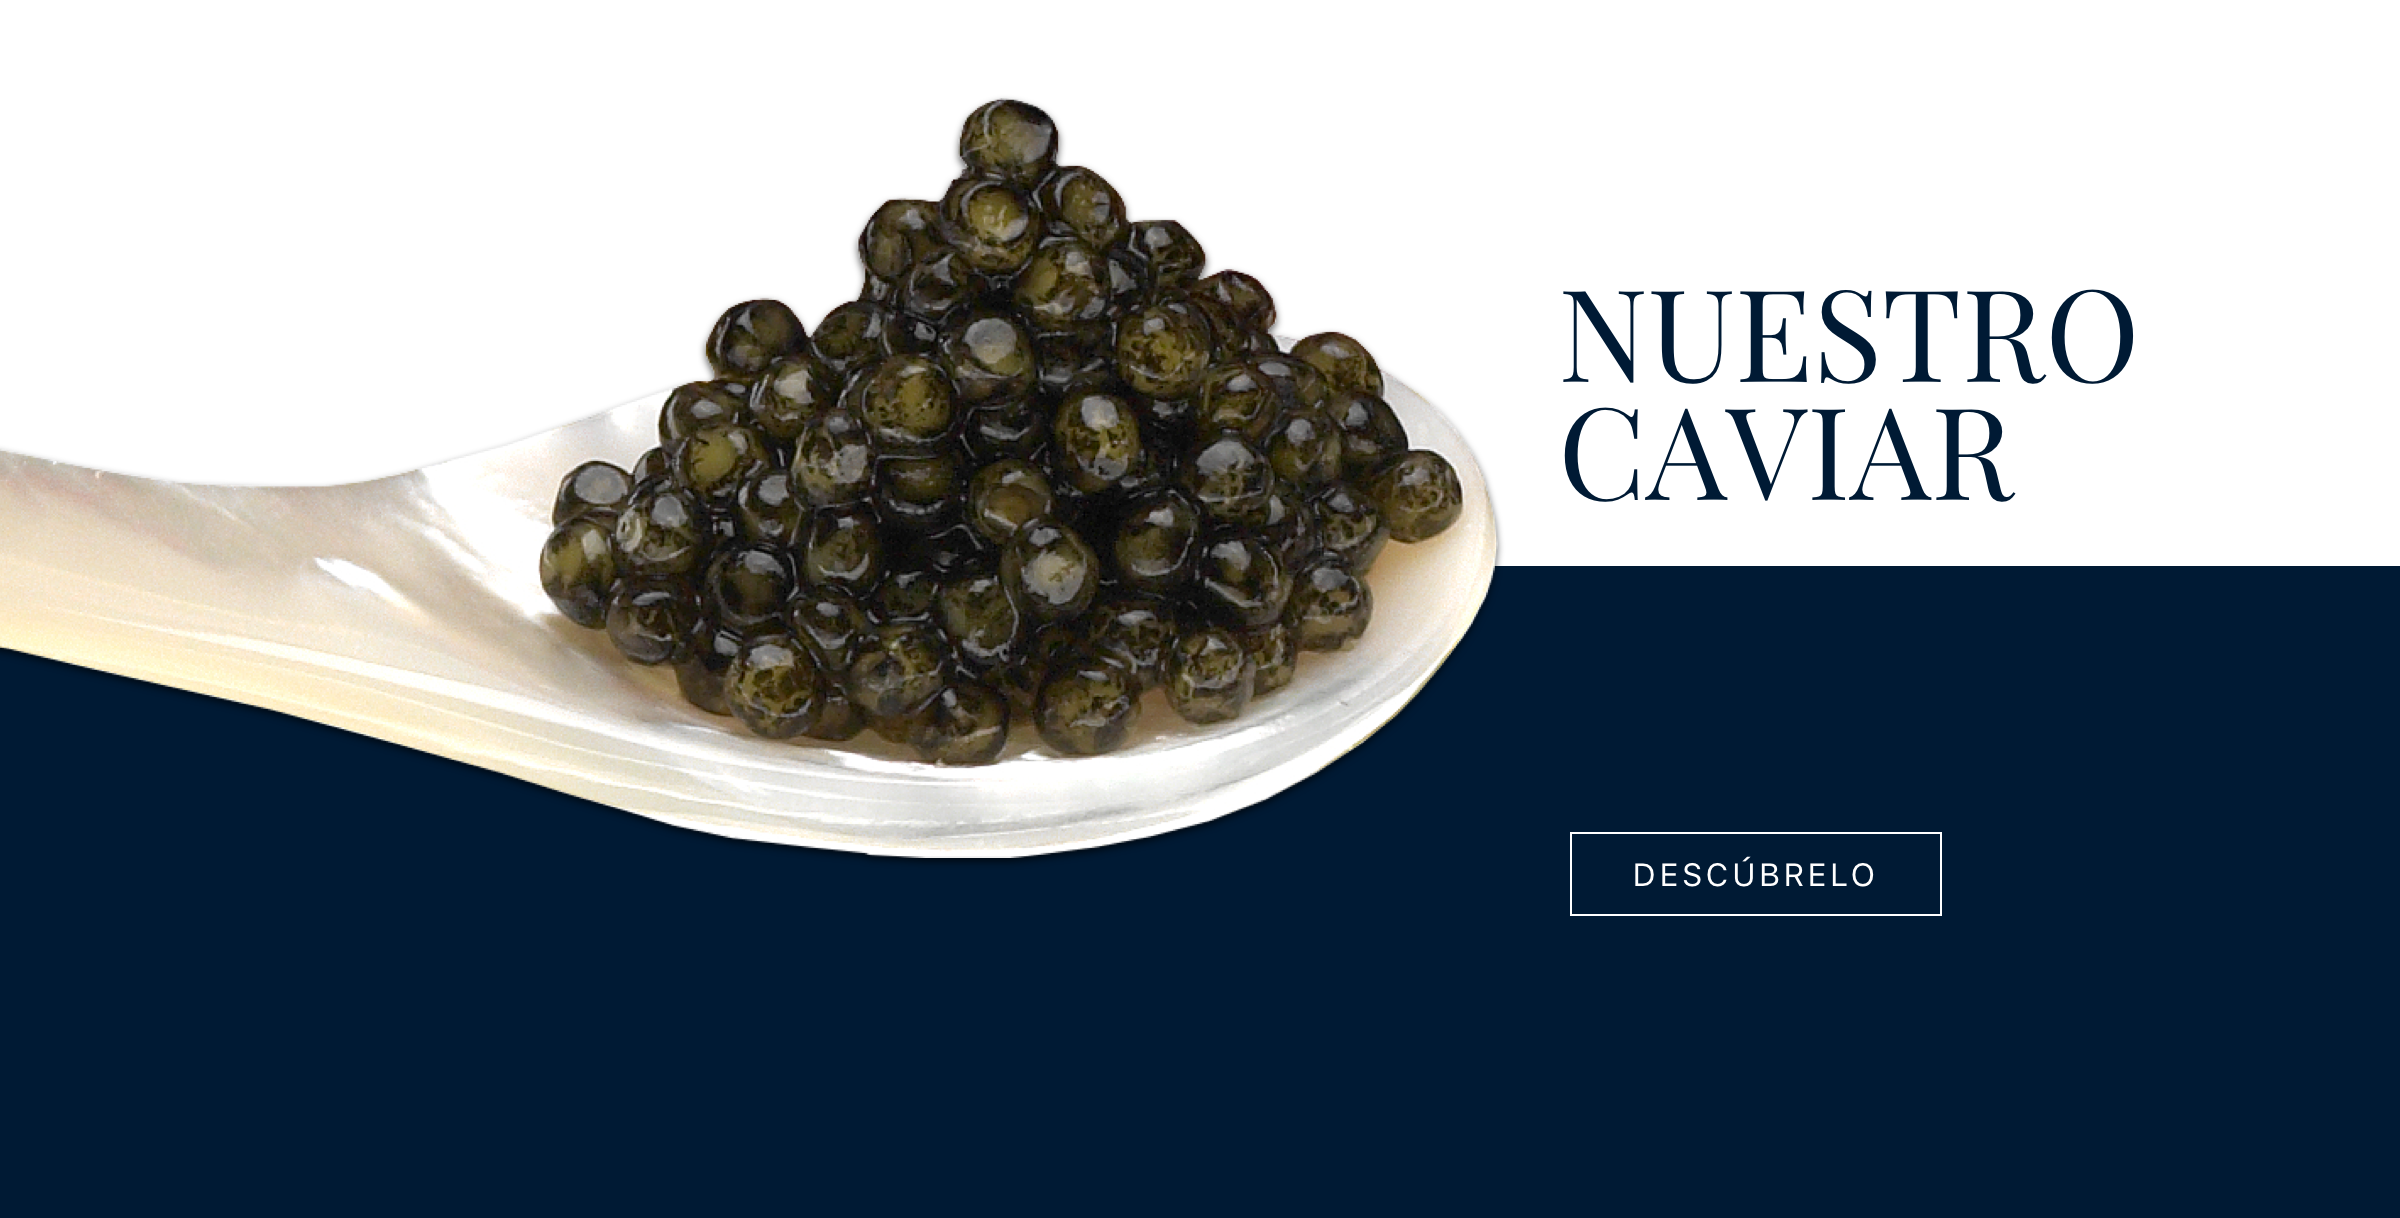 Caviar перевод. Черная икра PNG. Coined in Stone Paulina Caviar. What is sujiko Caviar?.